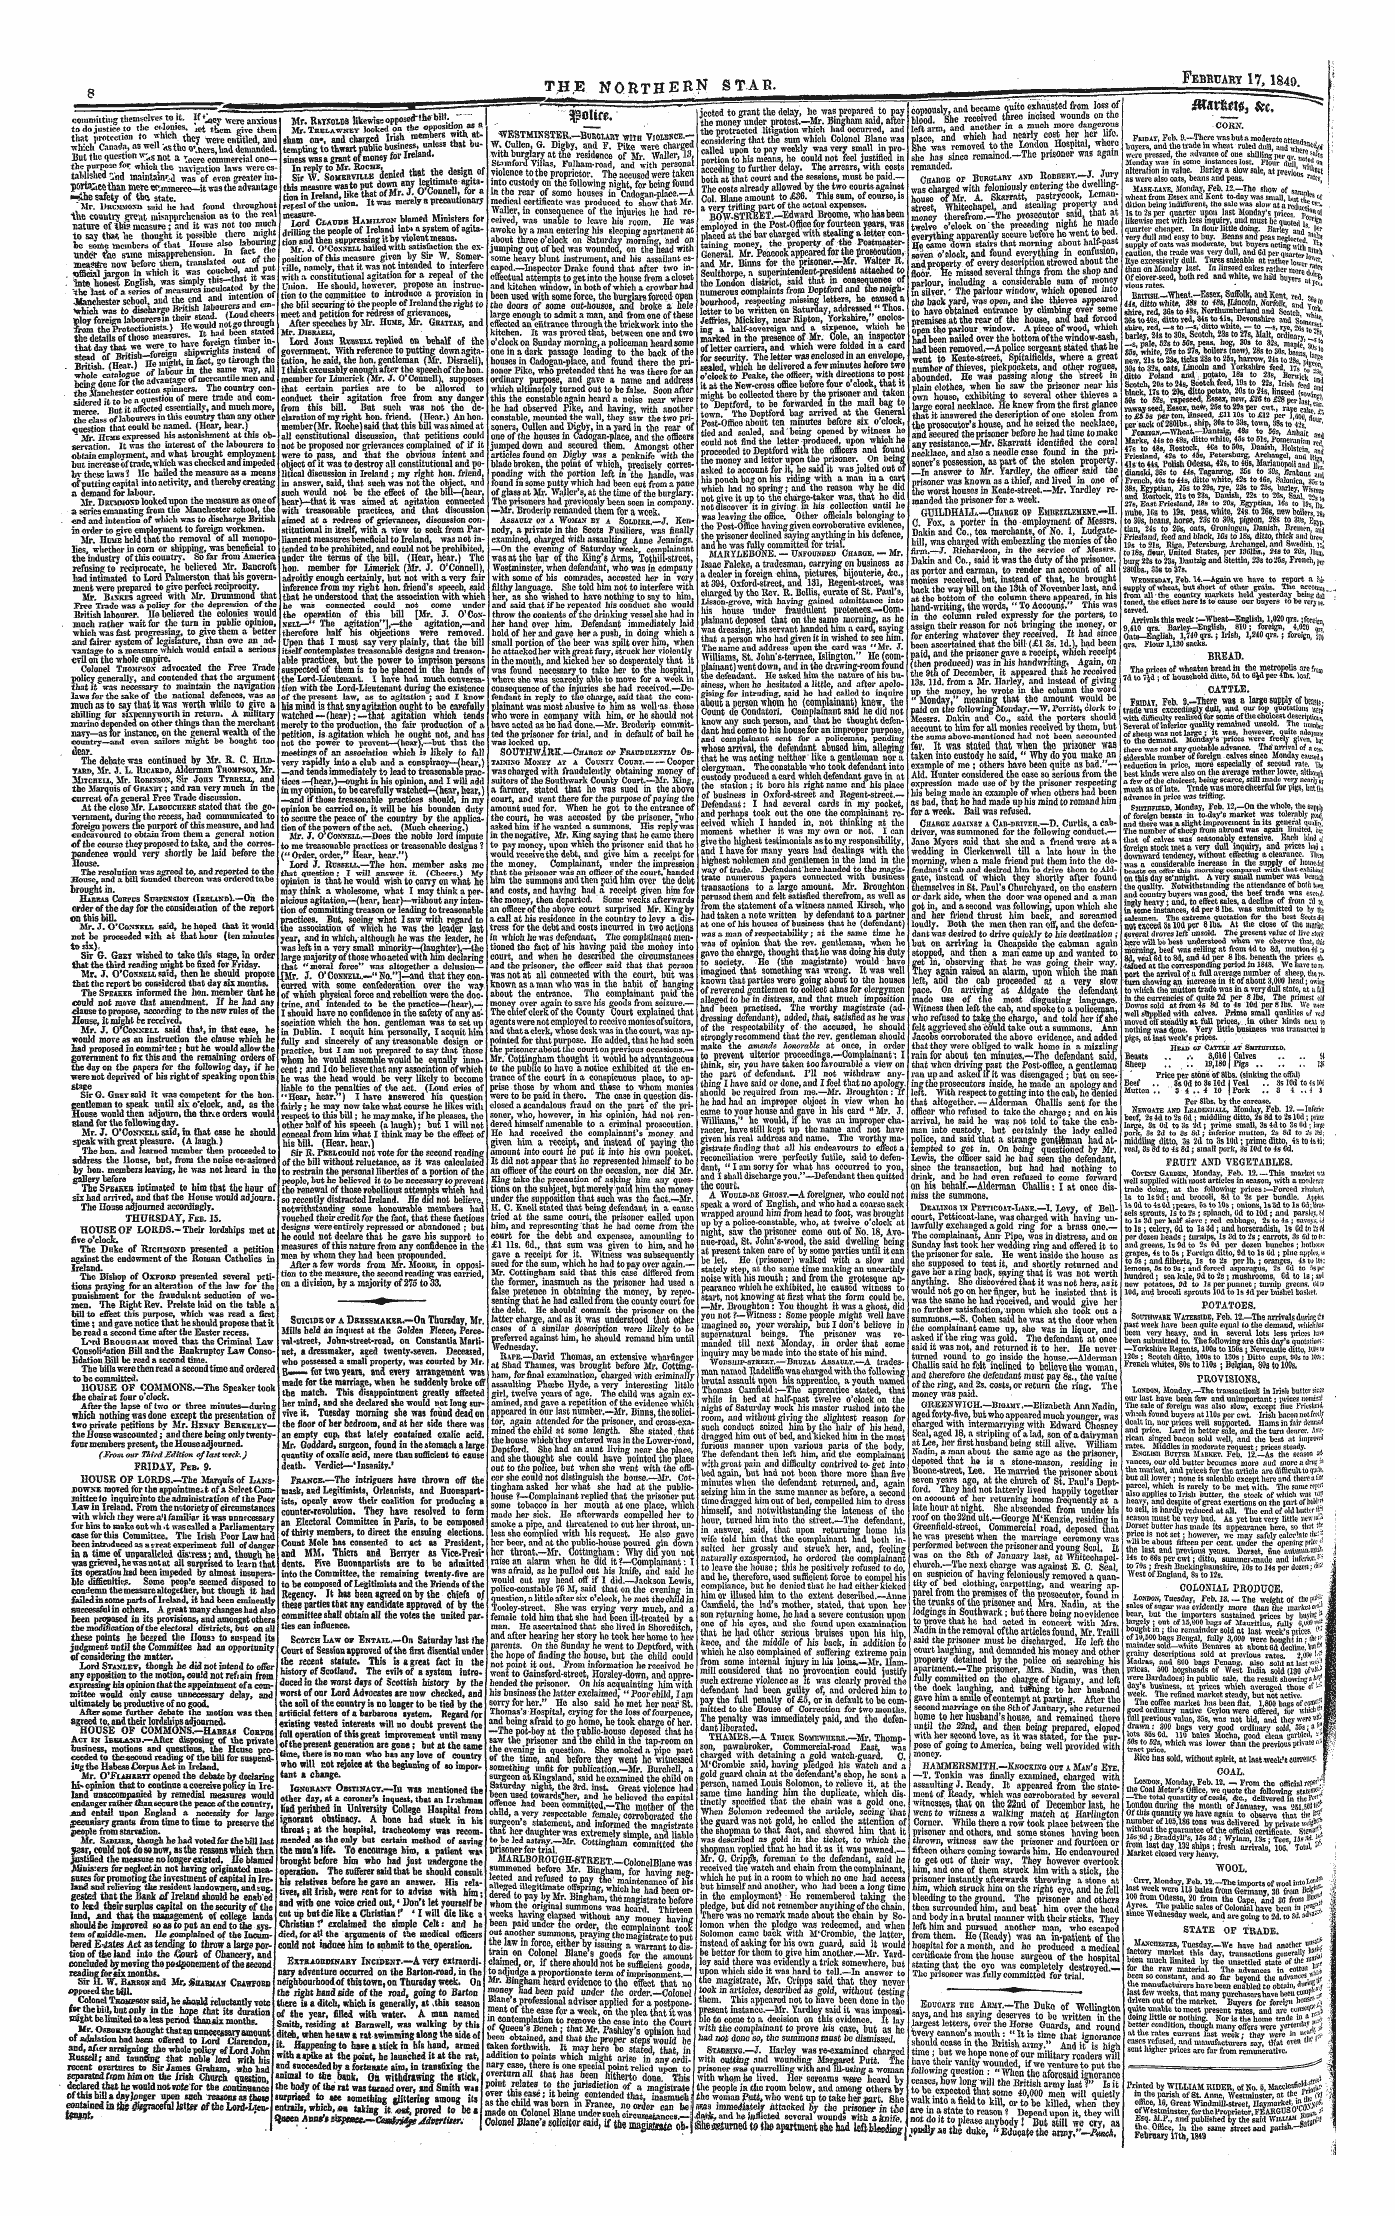 Northern Star (1837-1852): jS F Y, 1st edition - Mmm3 &T. #*«««, *C.